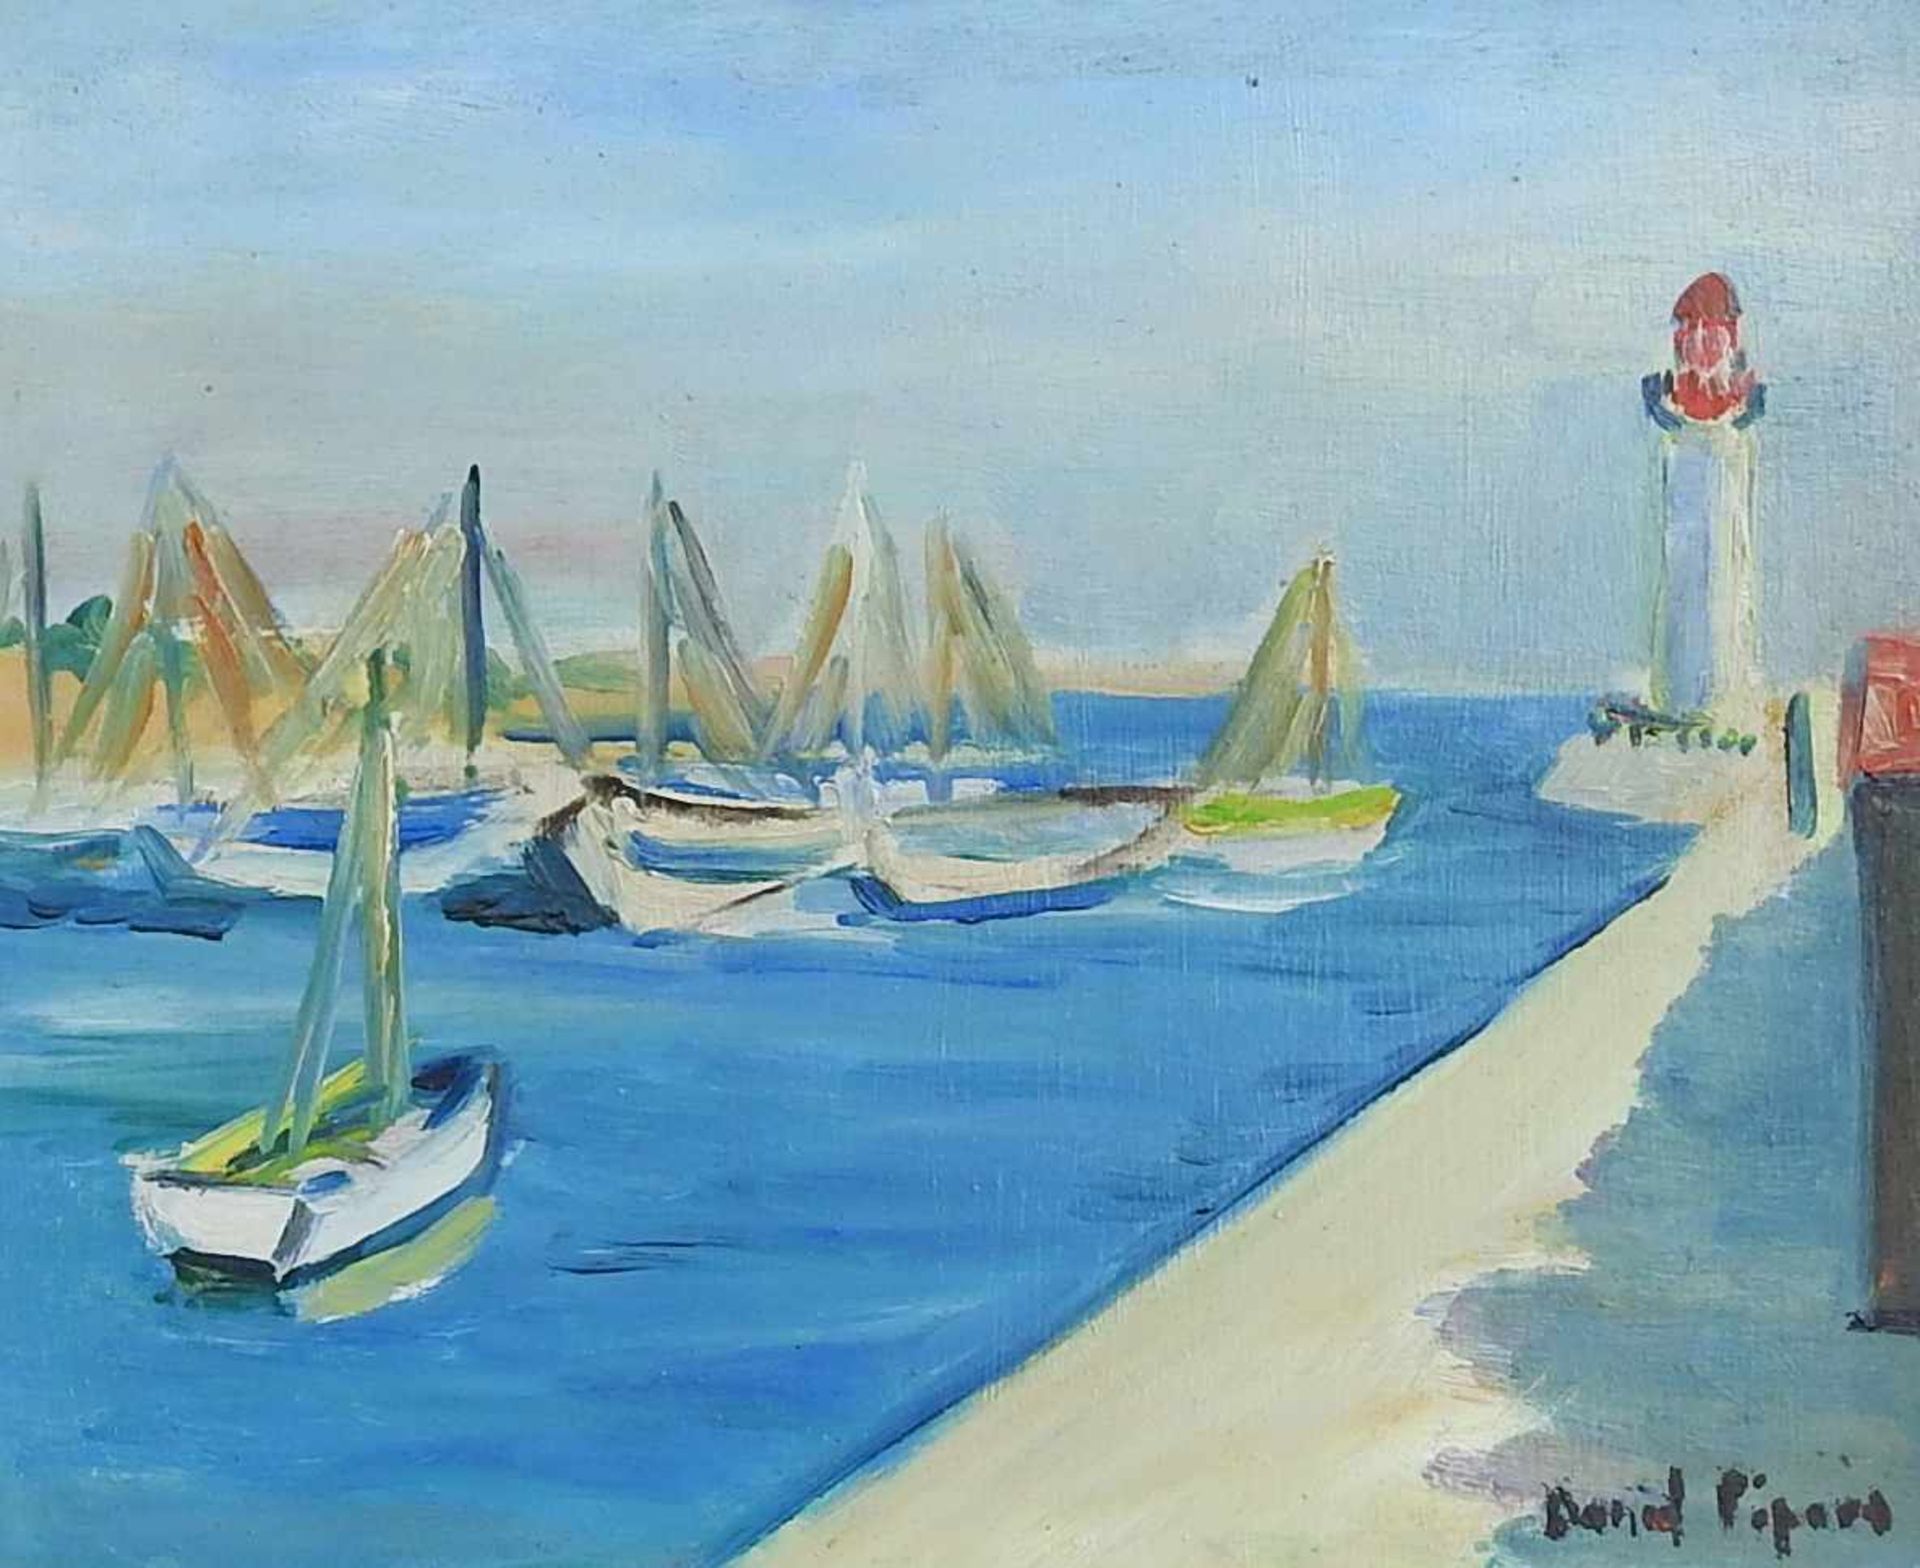 Daniel Pipard, 1914 Paris - 1978 ebendaÖl/Hartfaserplatte. Leuchtturm am Hafen. Pipard ist berühmt